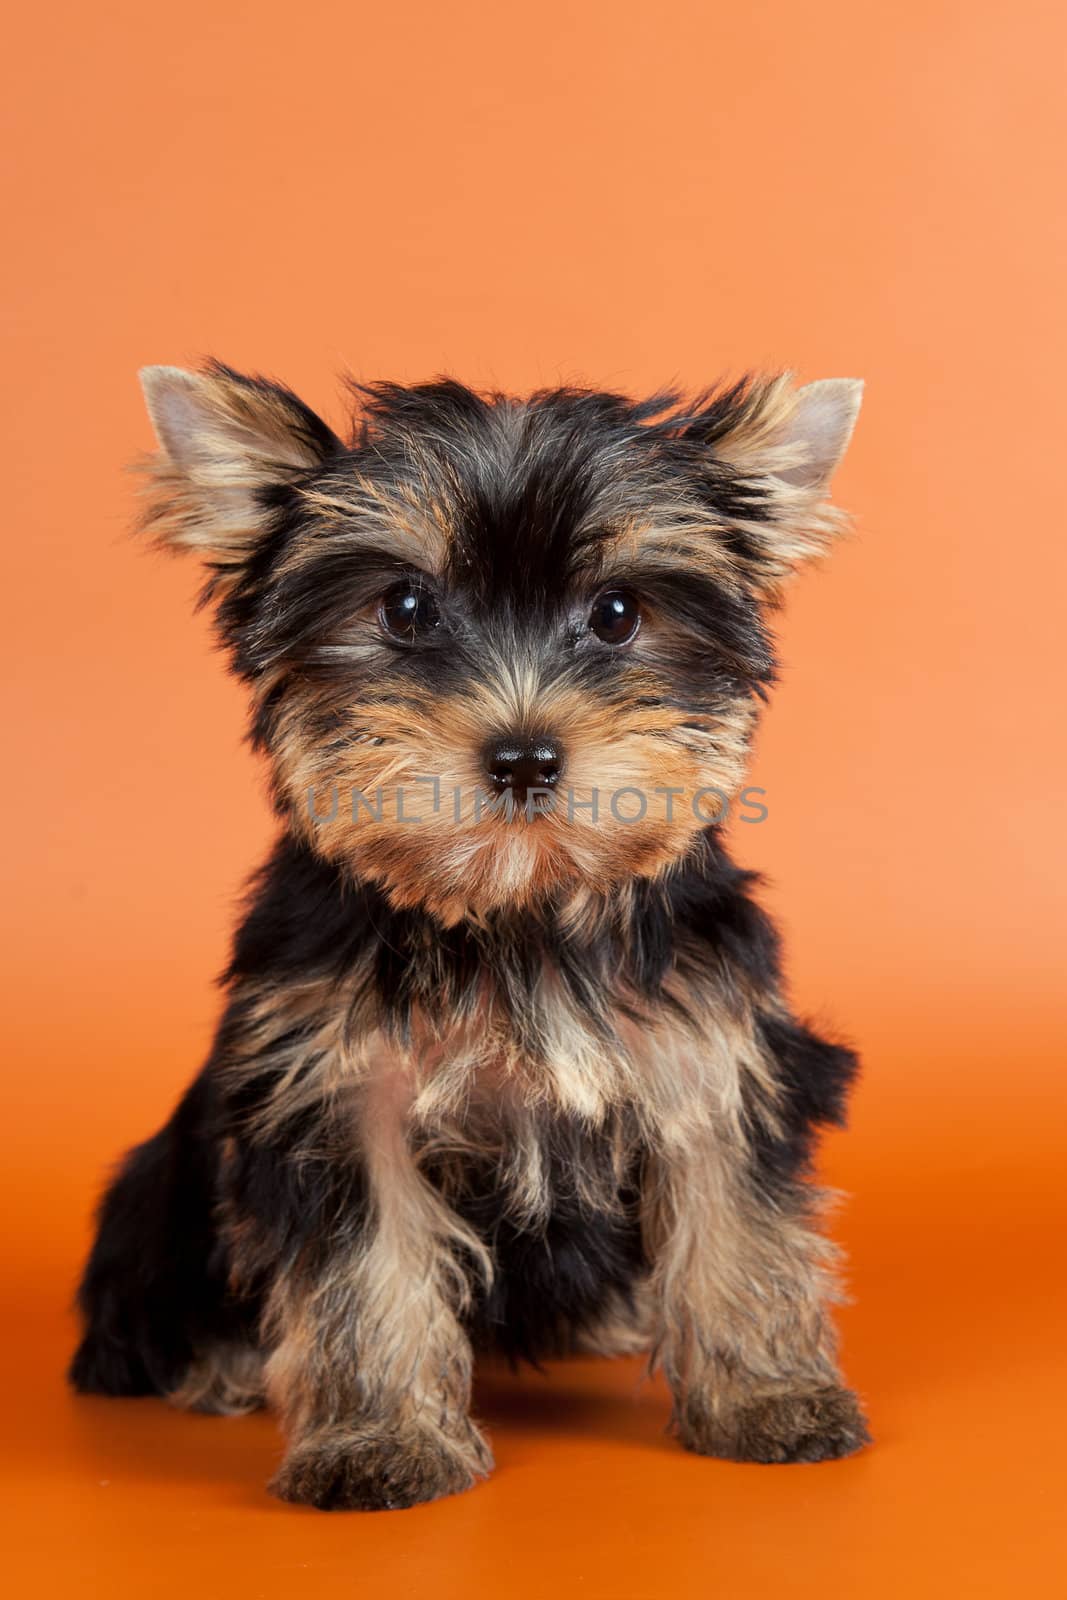 Puppy on orange background by mdmmikle